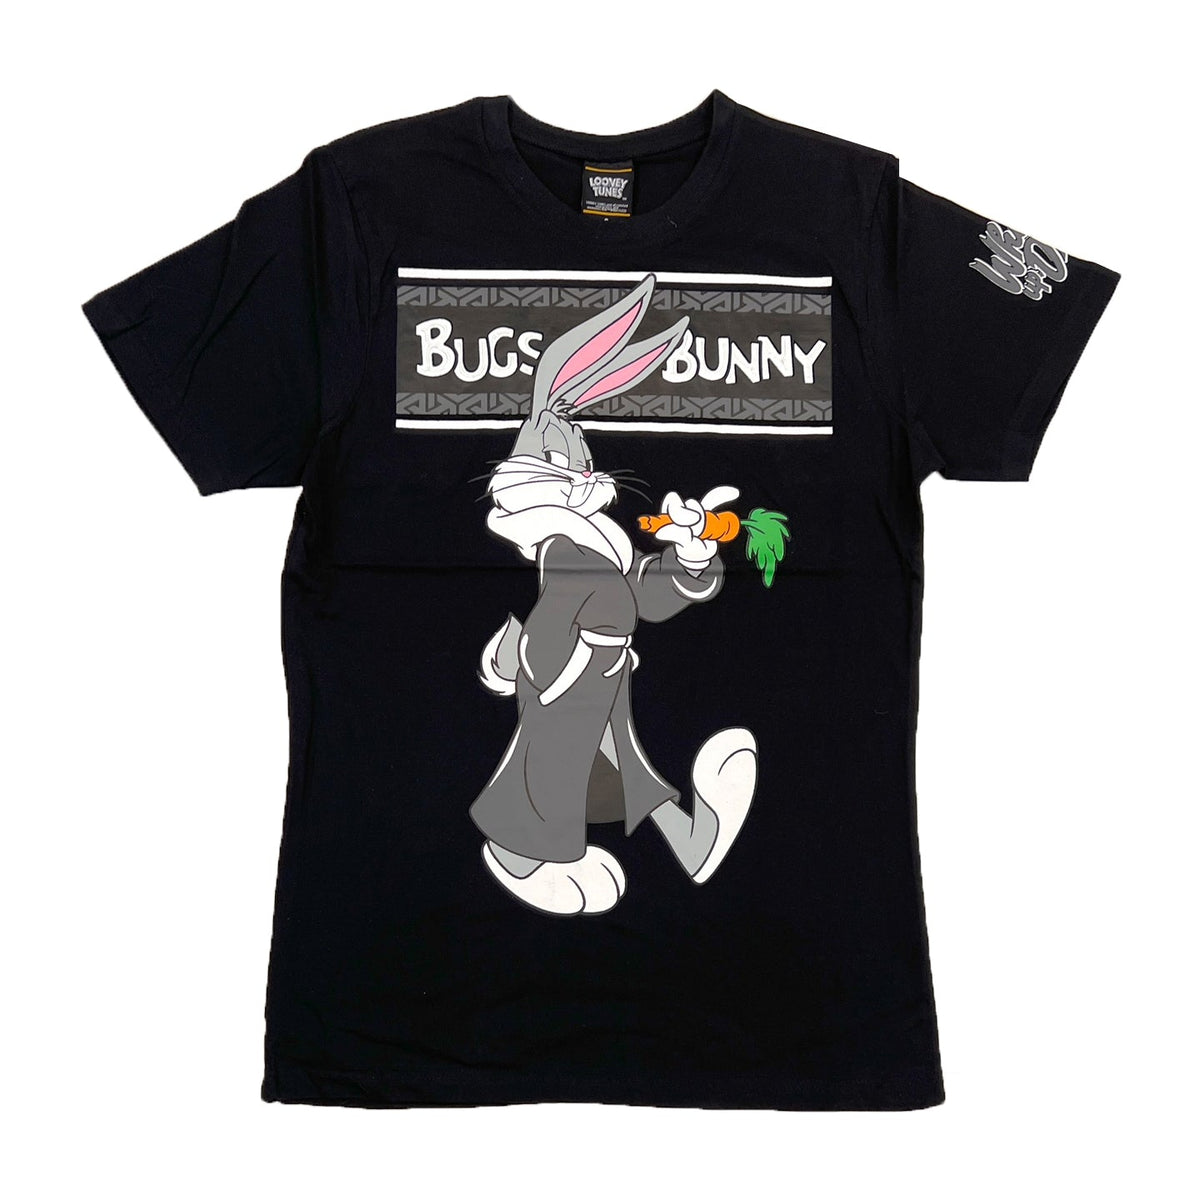 Looney Tunes Bugs Bunny / 2 $30 $16.99 for Tee (Black)